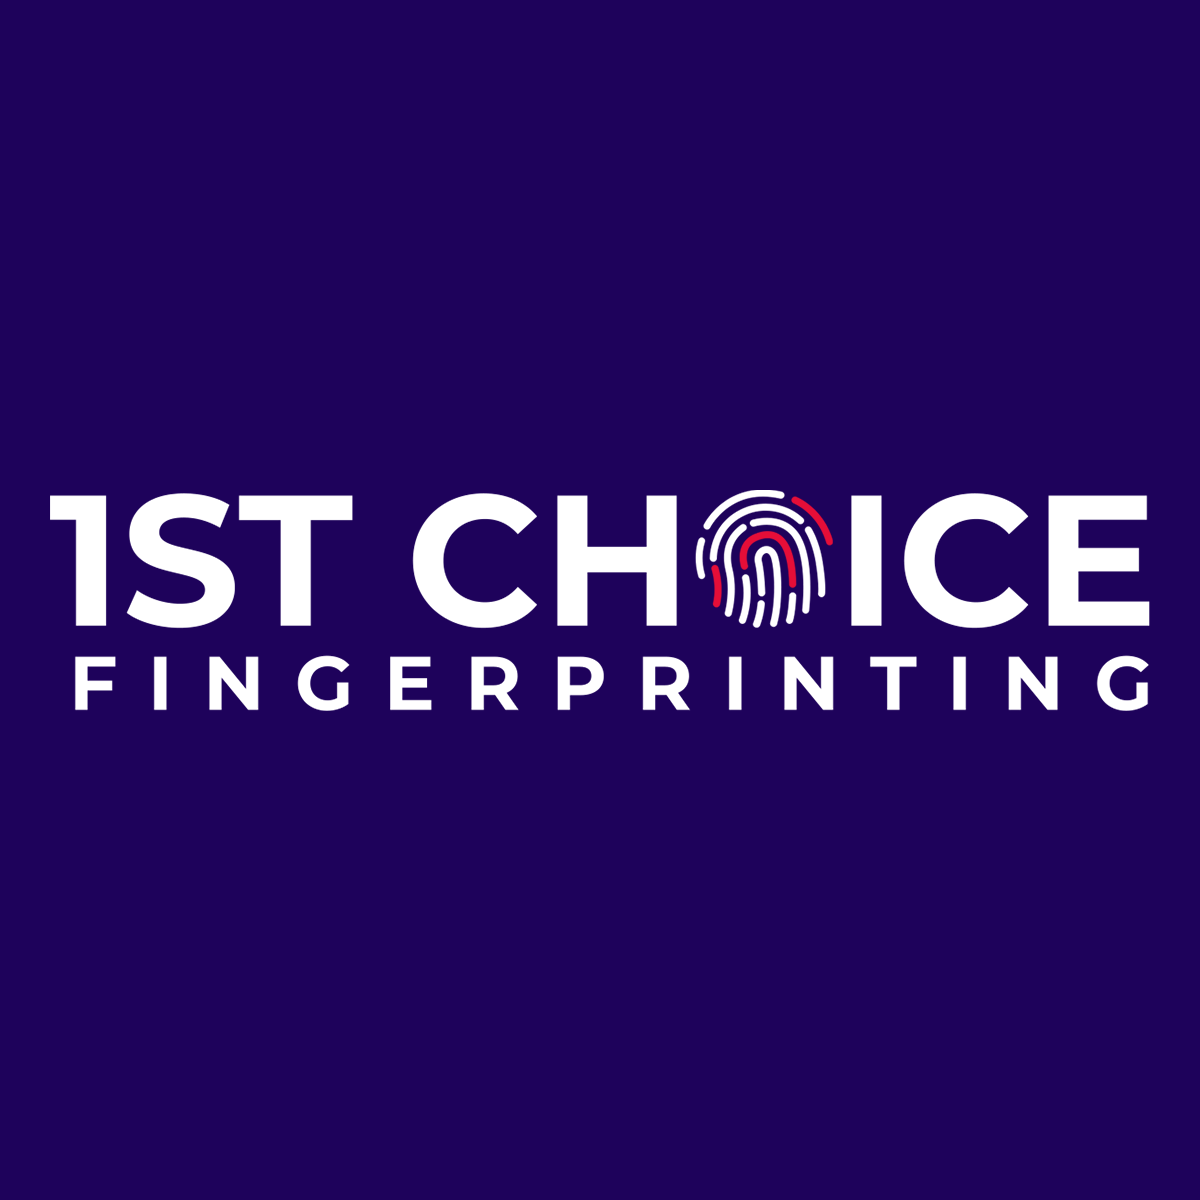 1st Choice Fingerprinting